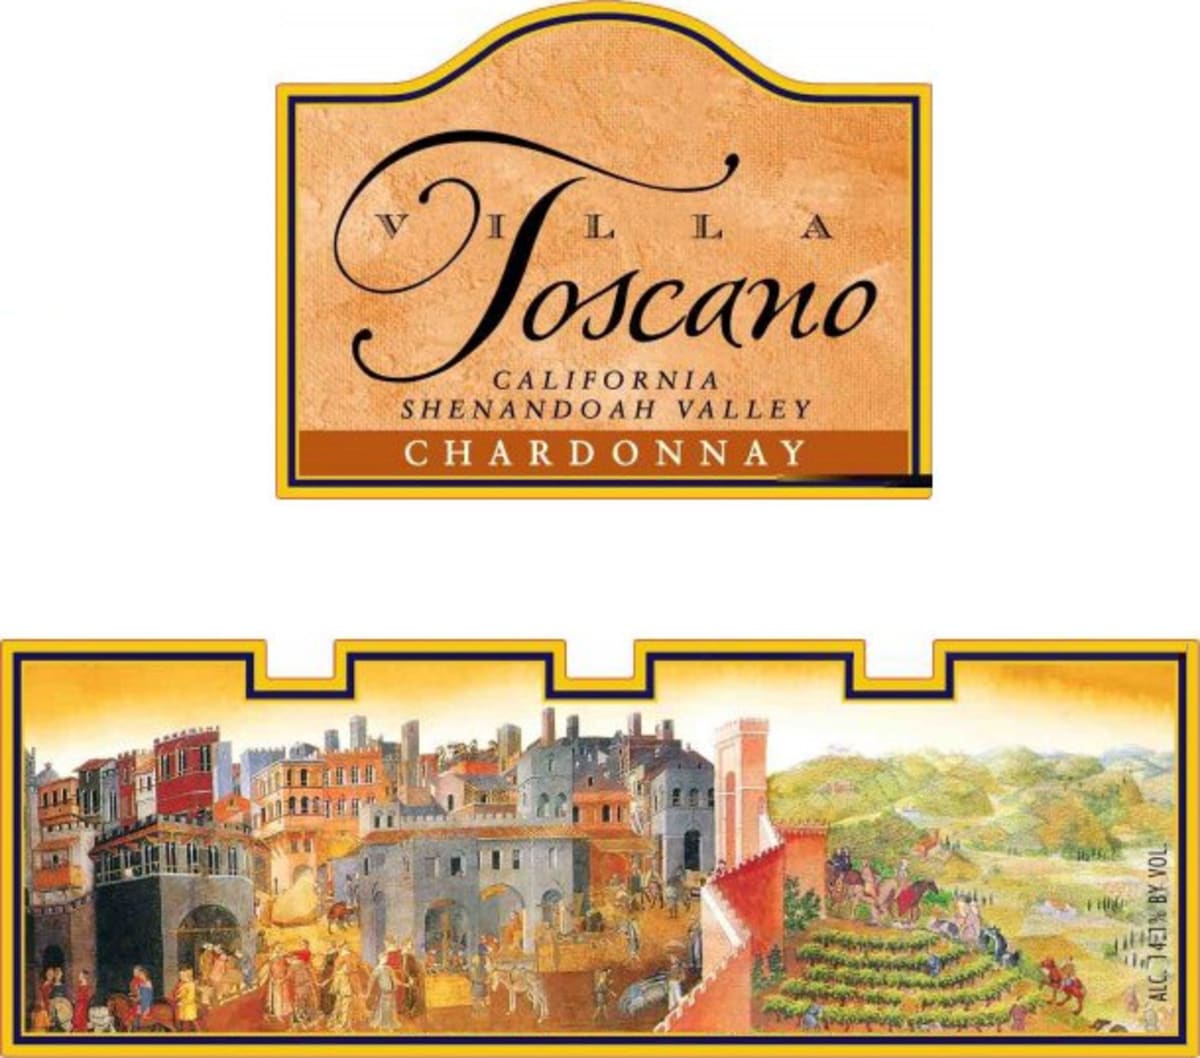 Villa Toscano Winery Chardonnay 2011 Front Label